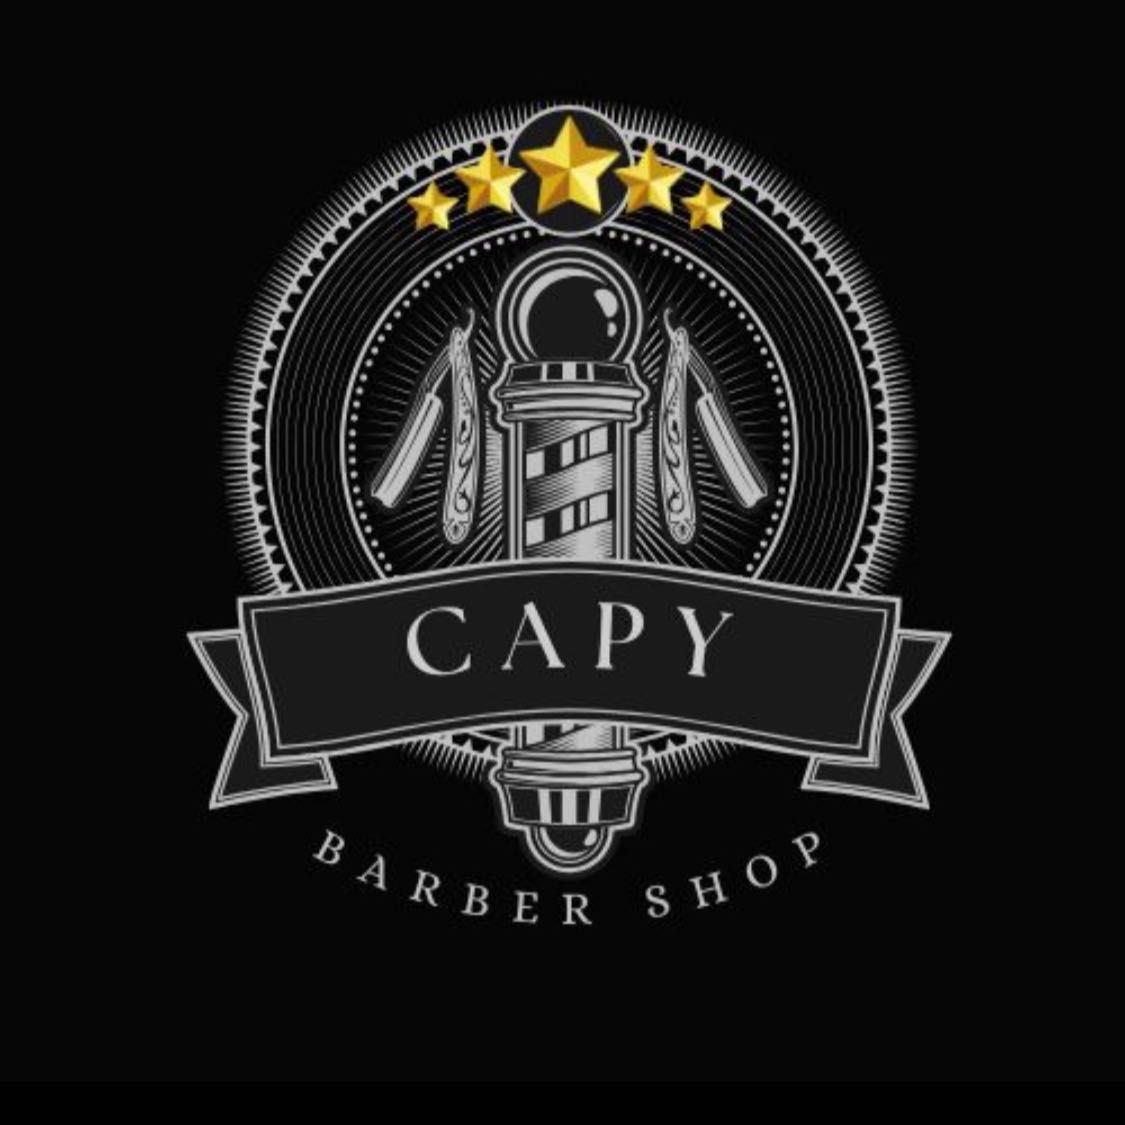 Capy Barber Shop, 65 e broad st Bethlehem 18018 pa, Bethlehem, 18018